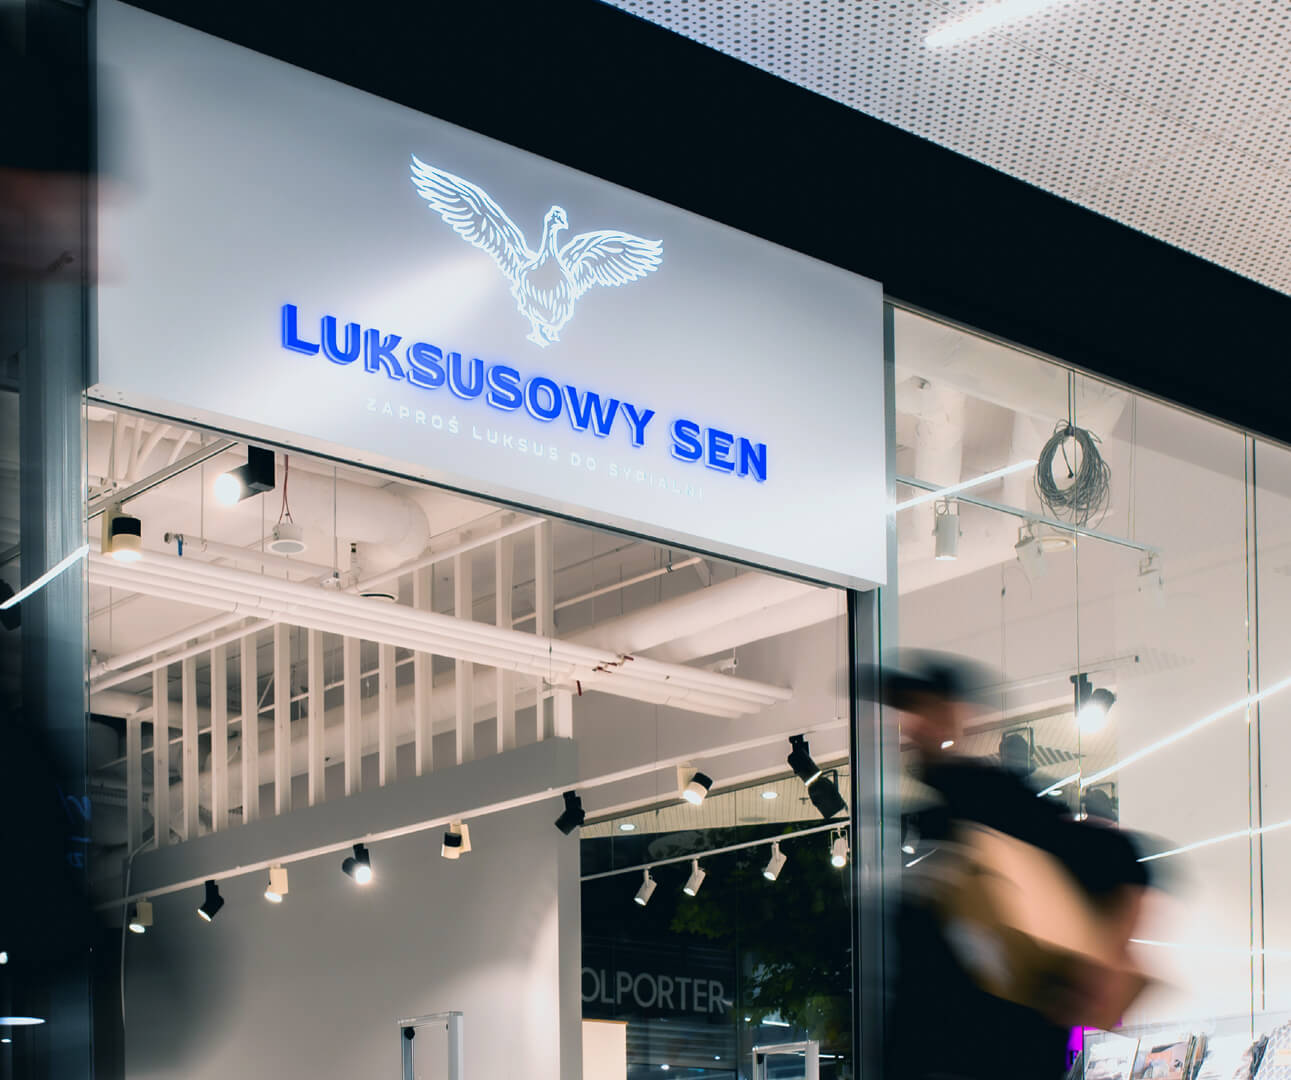 Sueño de lujo - Panel de dibond sobre la entrada de la tienda, retroiluminado con LED